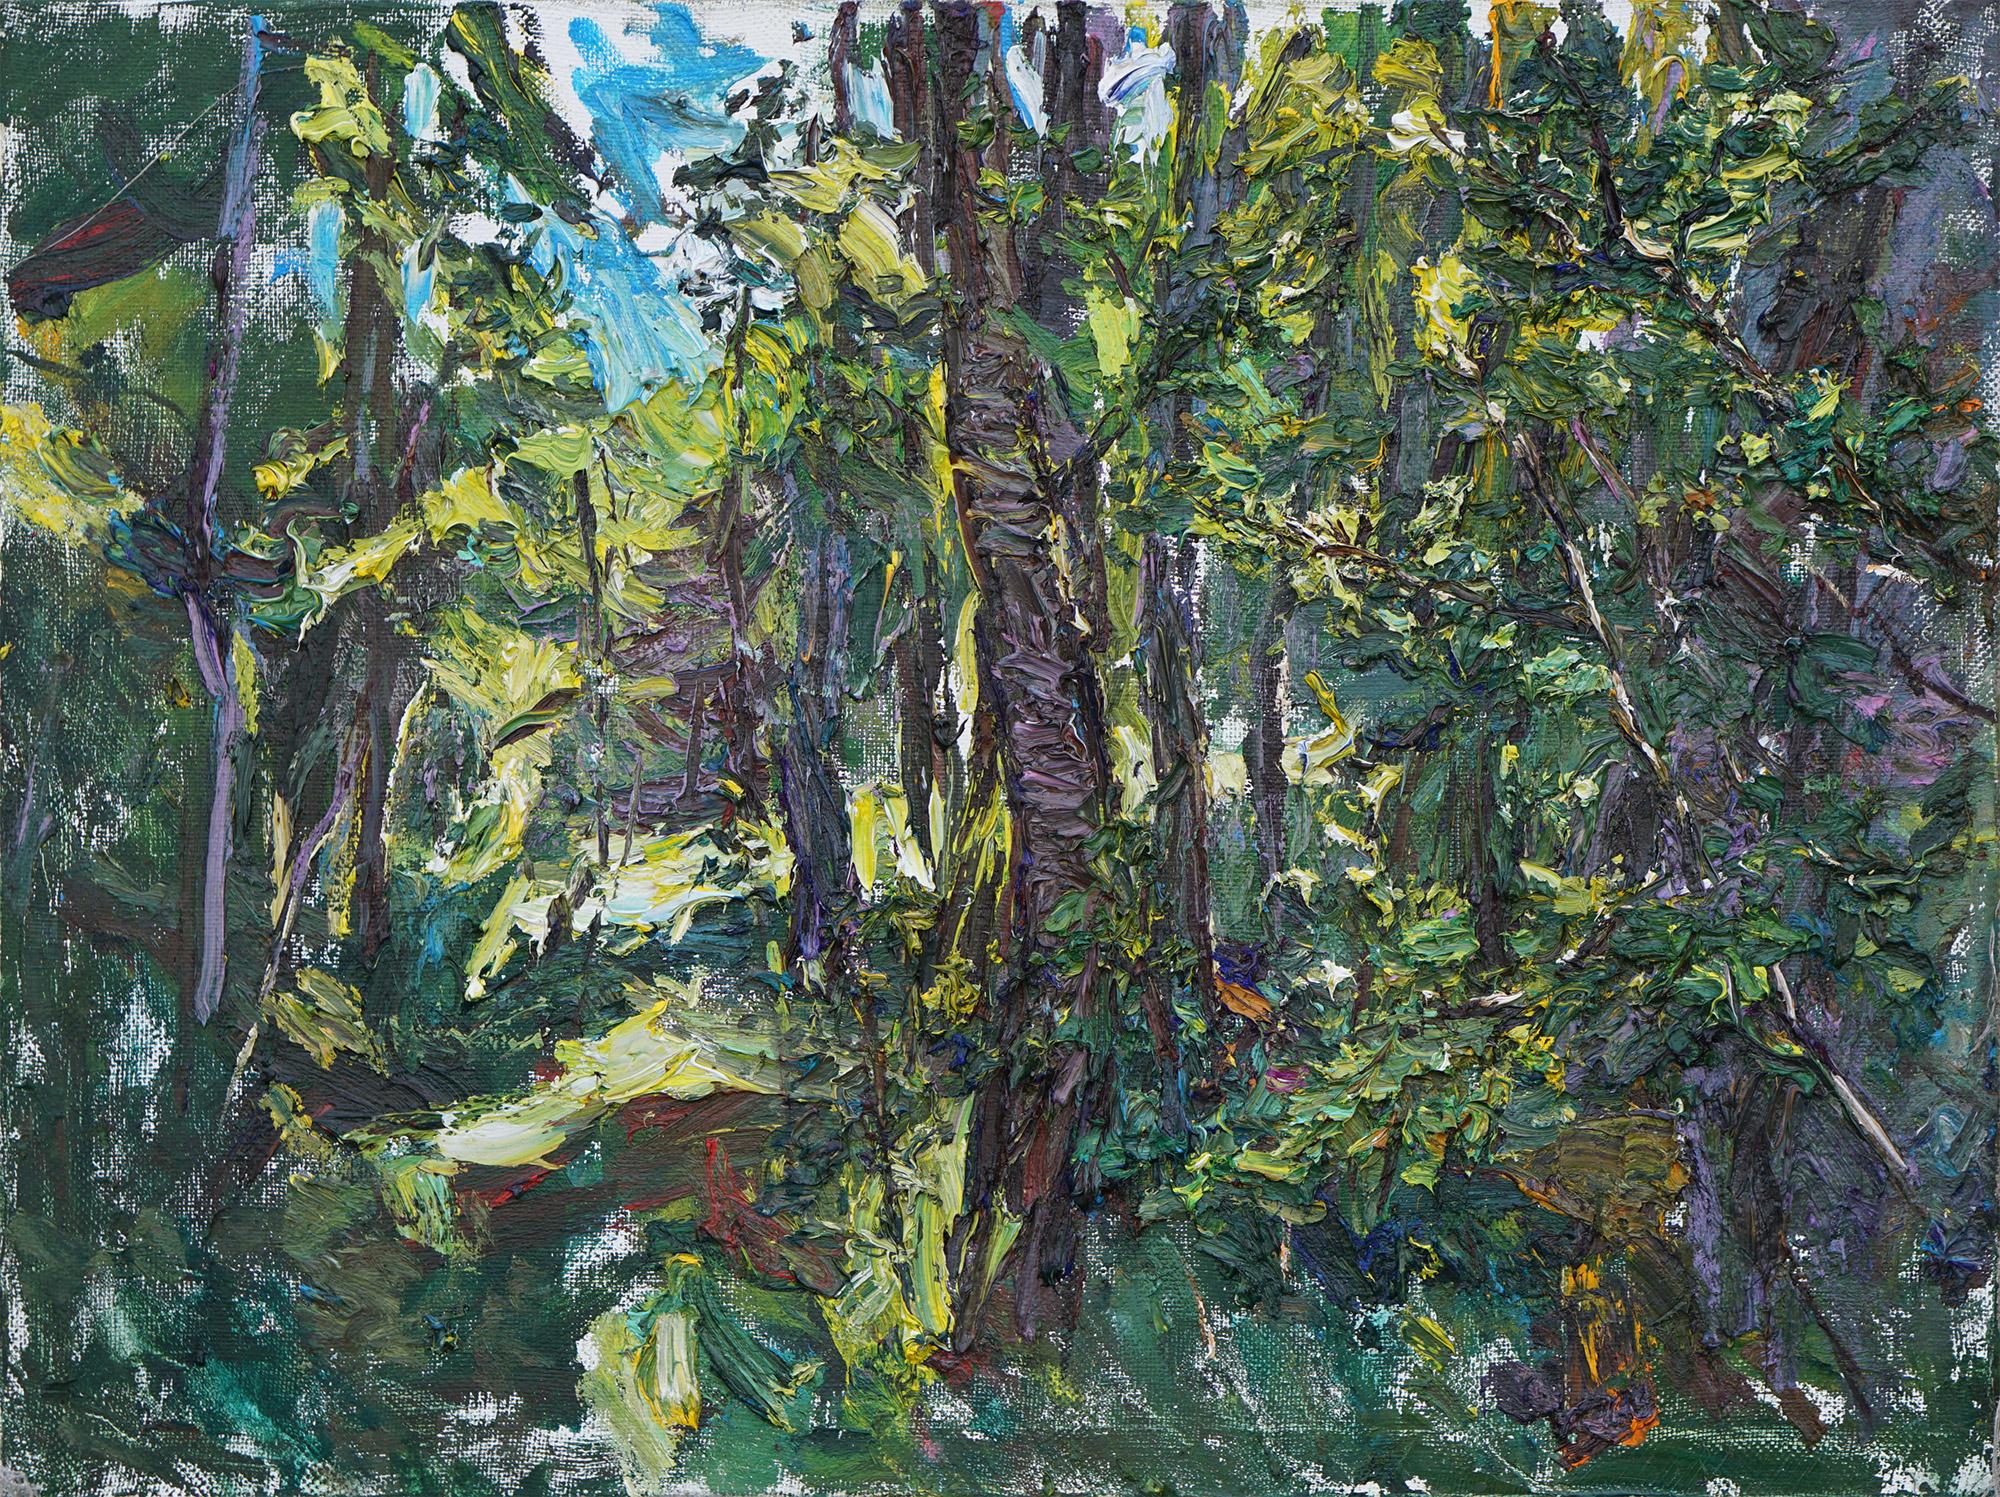 Landscape Painting Ulrich Gleiter - Peinture à l'huile « Greens in a Forest » (verts dans une forêt)